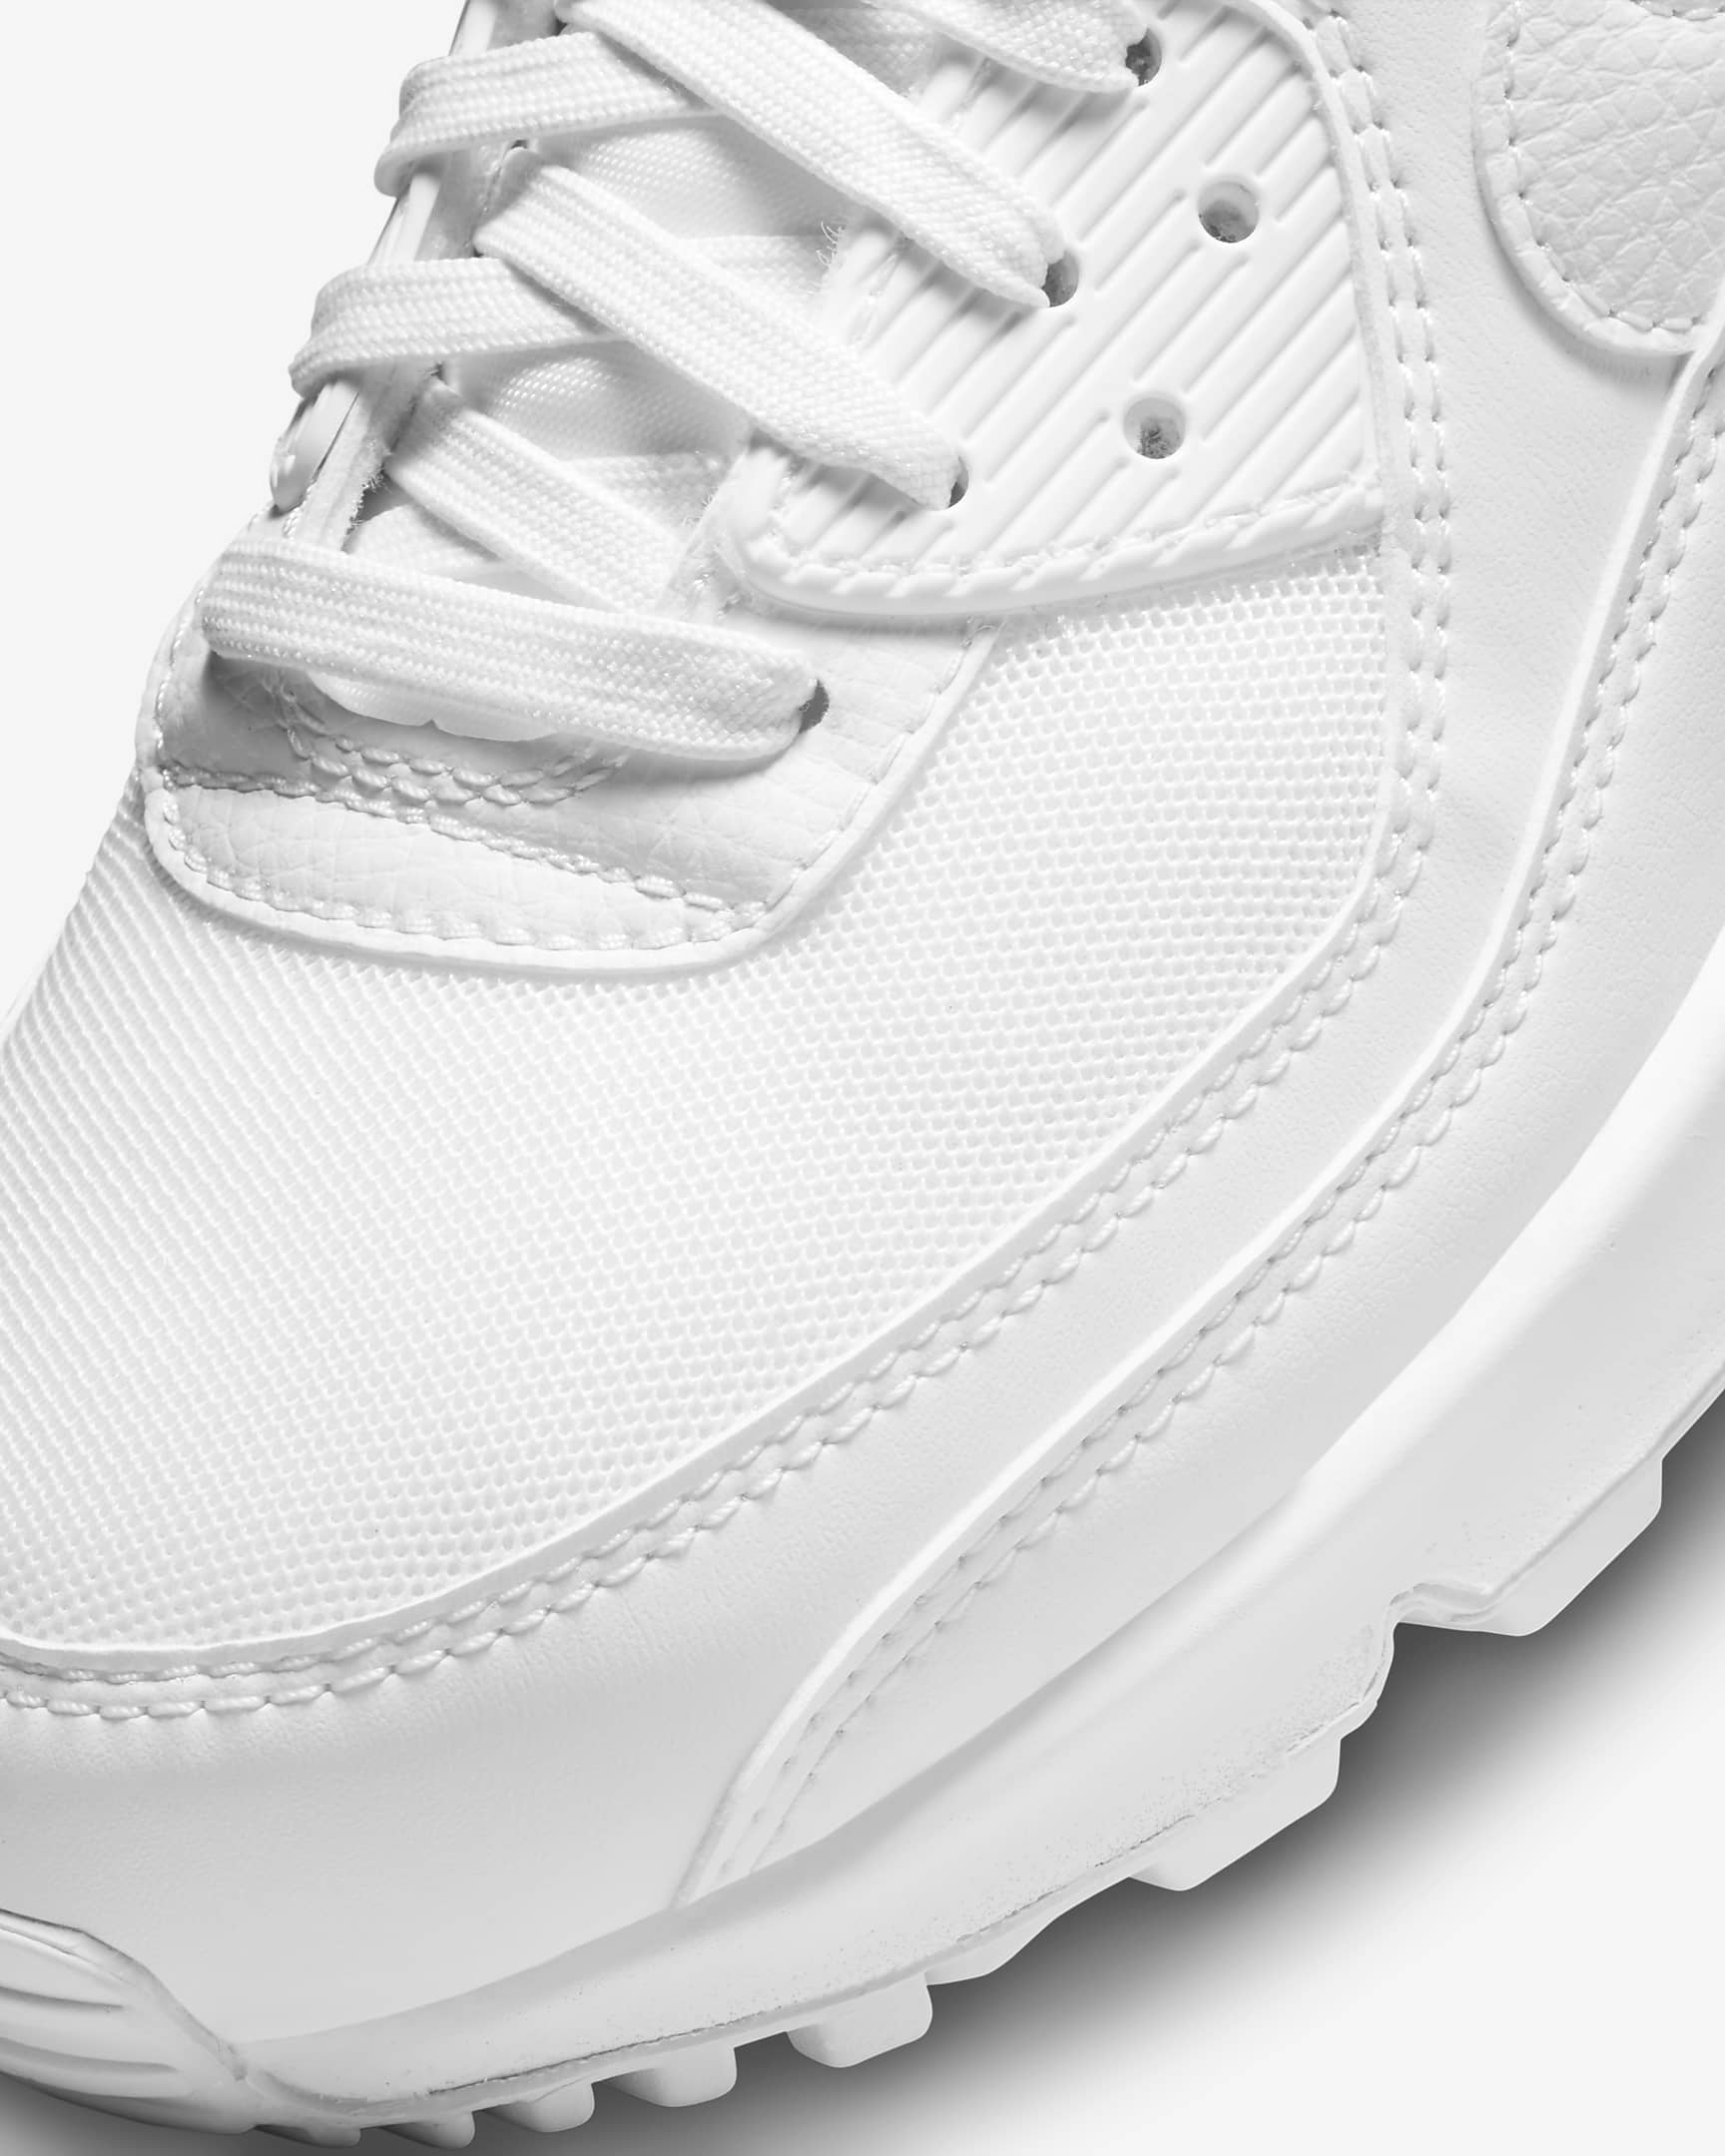 Nike Air Max 90 Damenschuh - Weiß/Weiß/Weiß